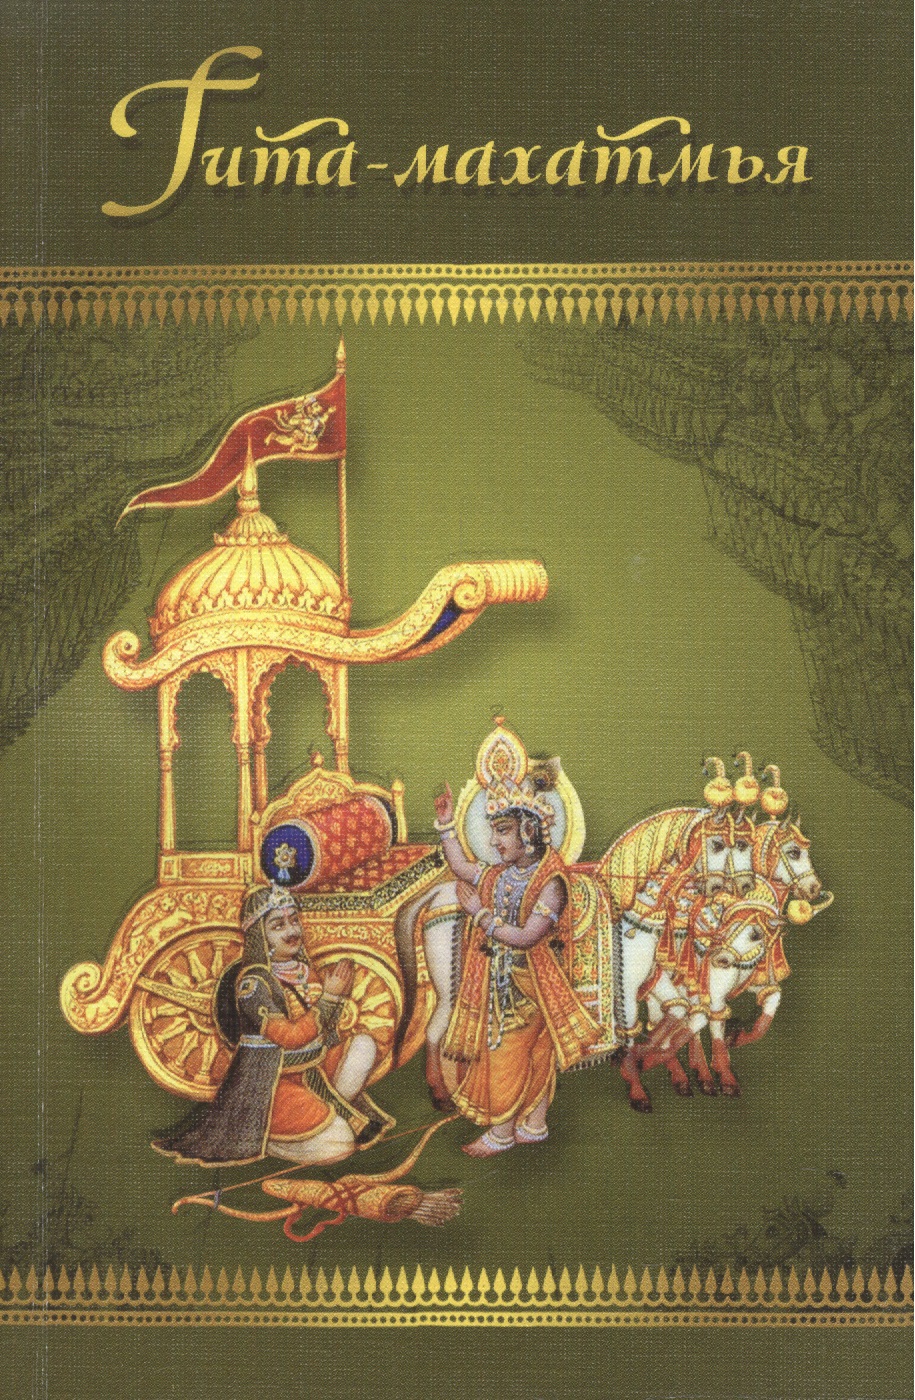 Гита-махатмья. Прославление Бхагавад-гиты из Падма-пураны